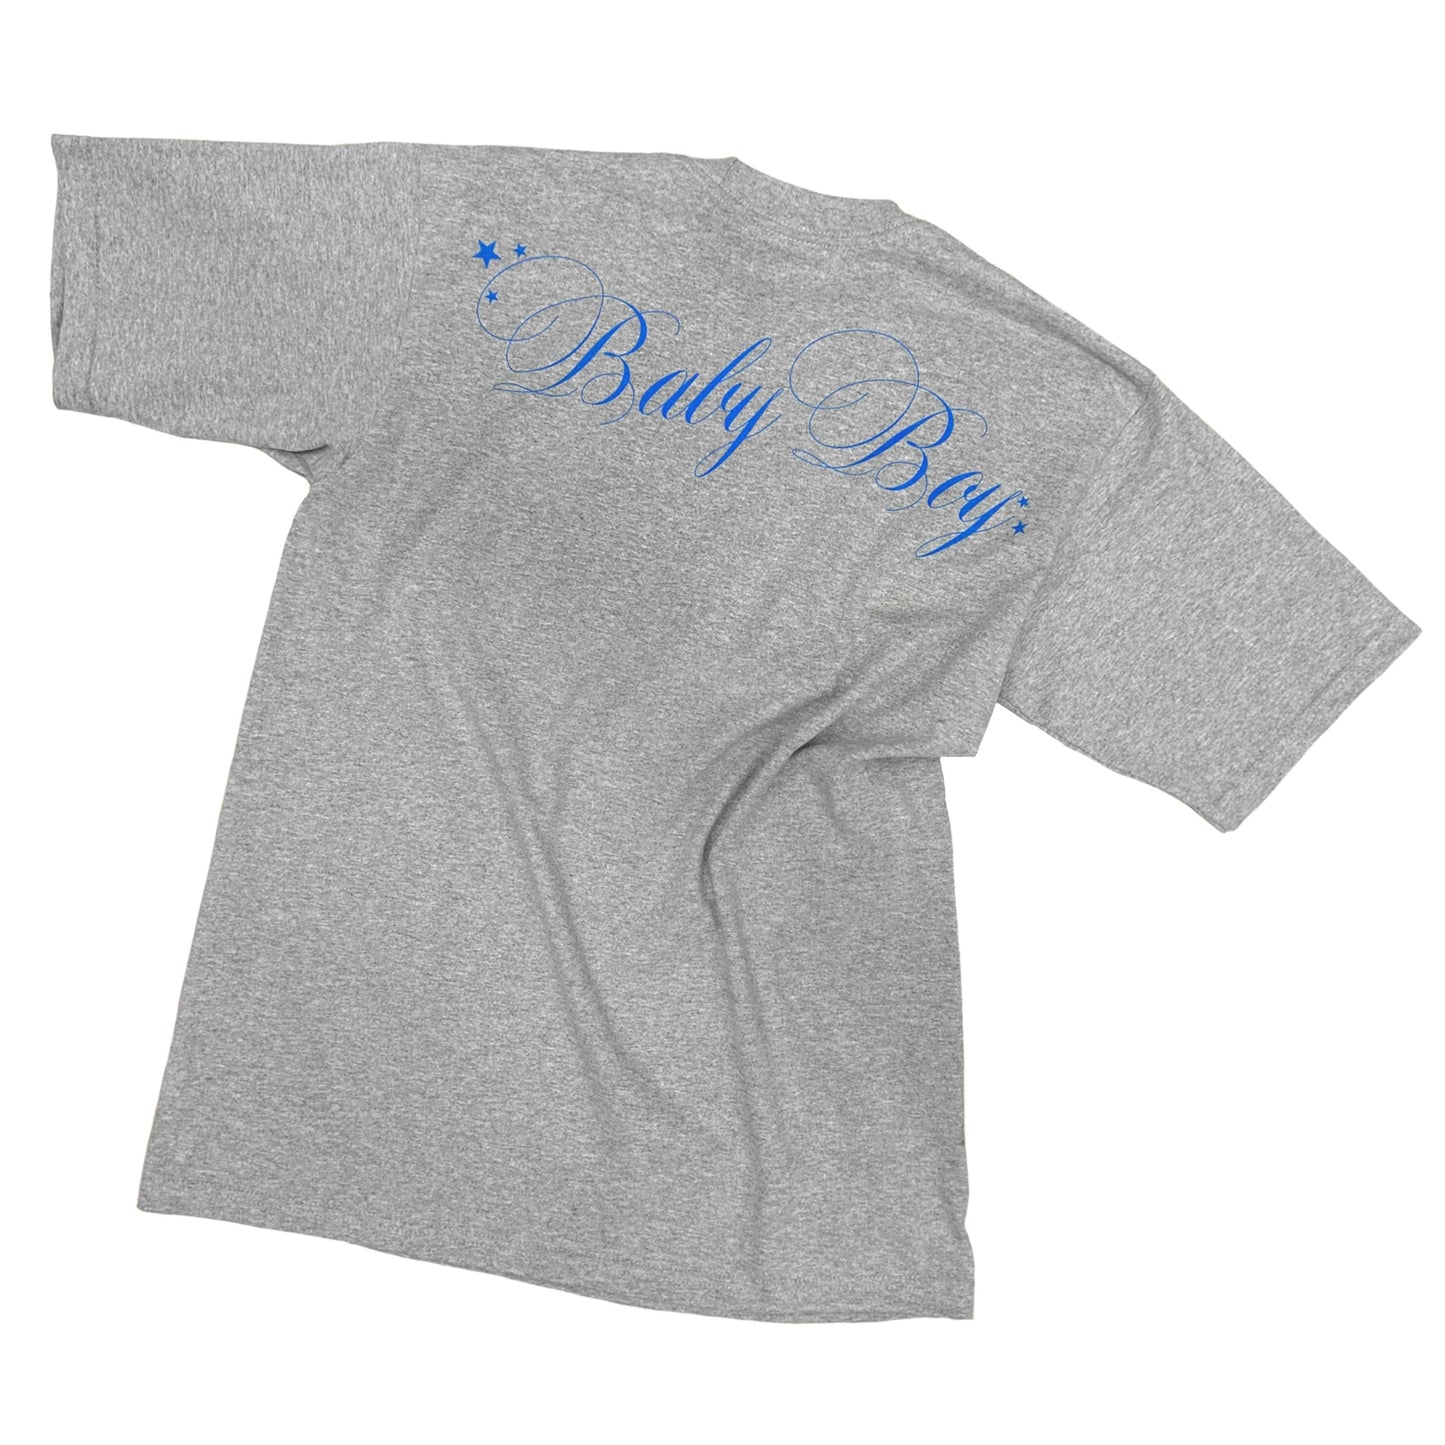 BabyBoy T-shirt